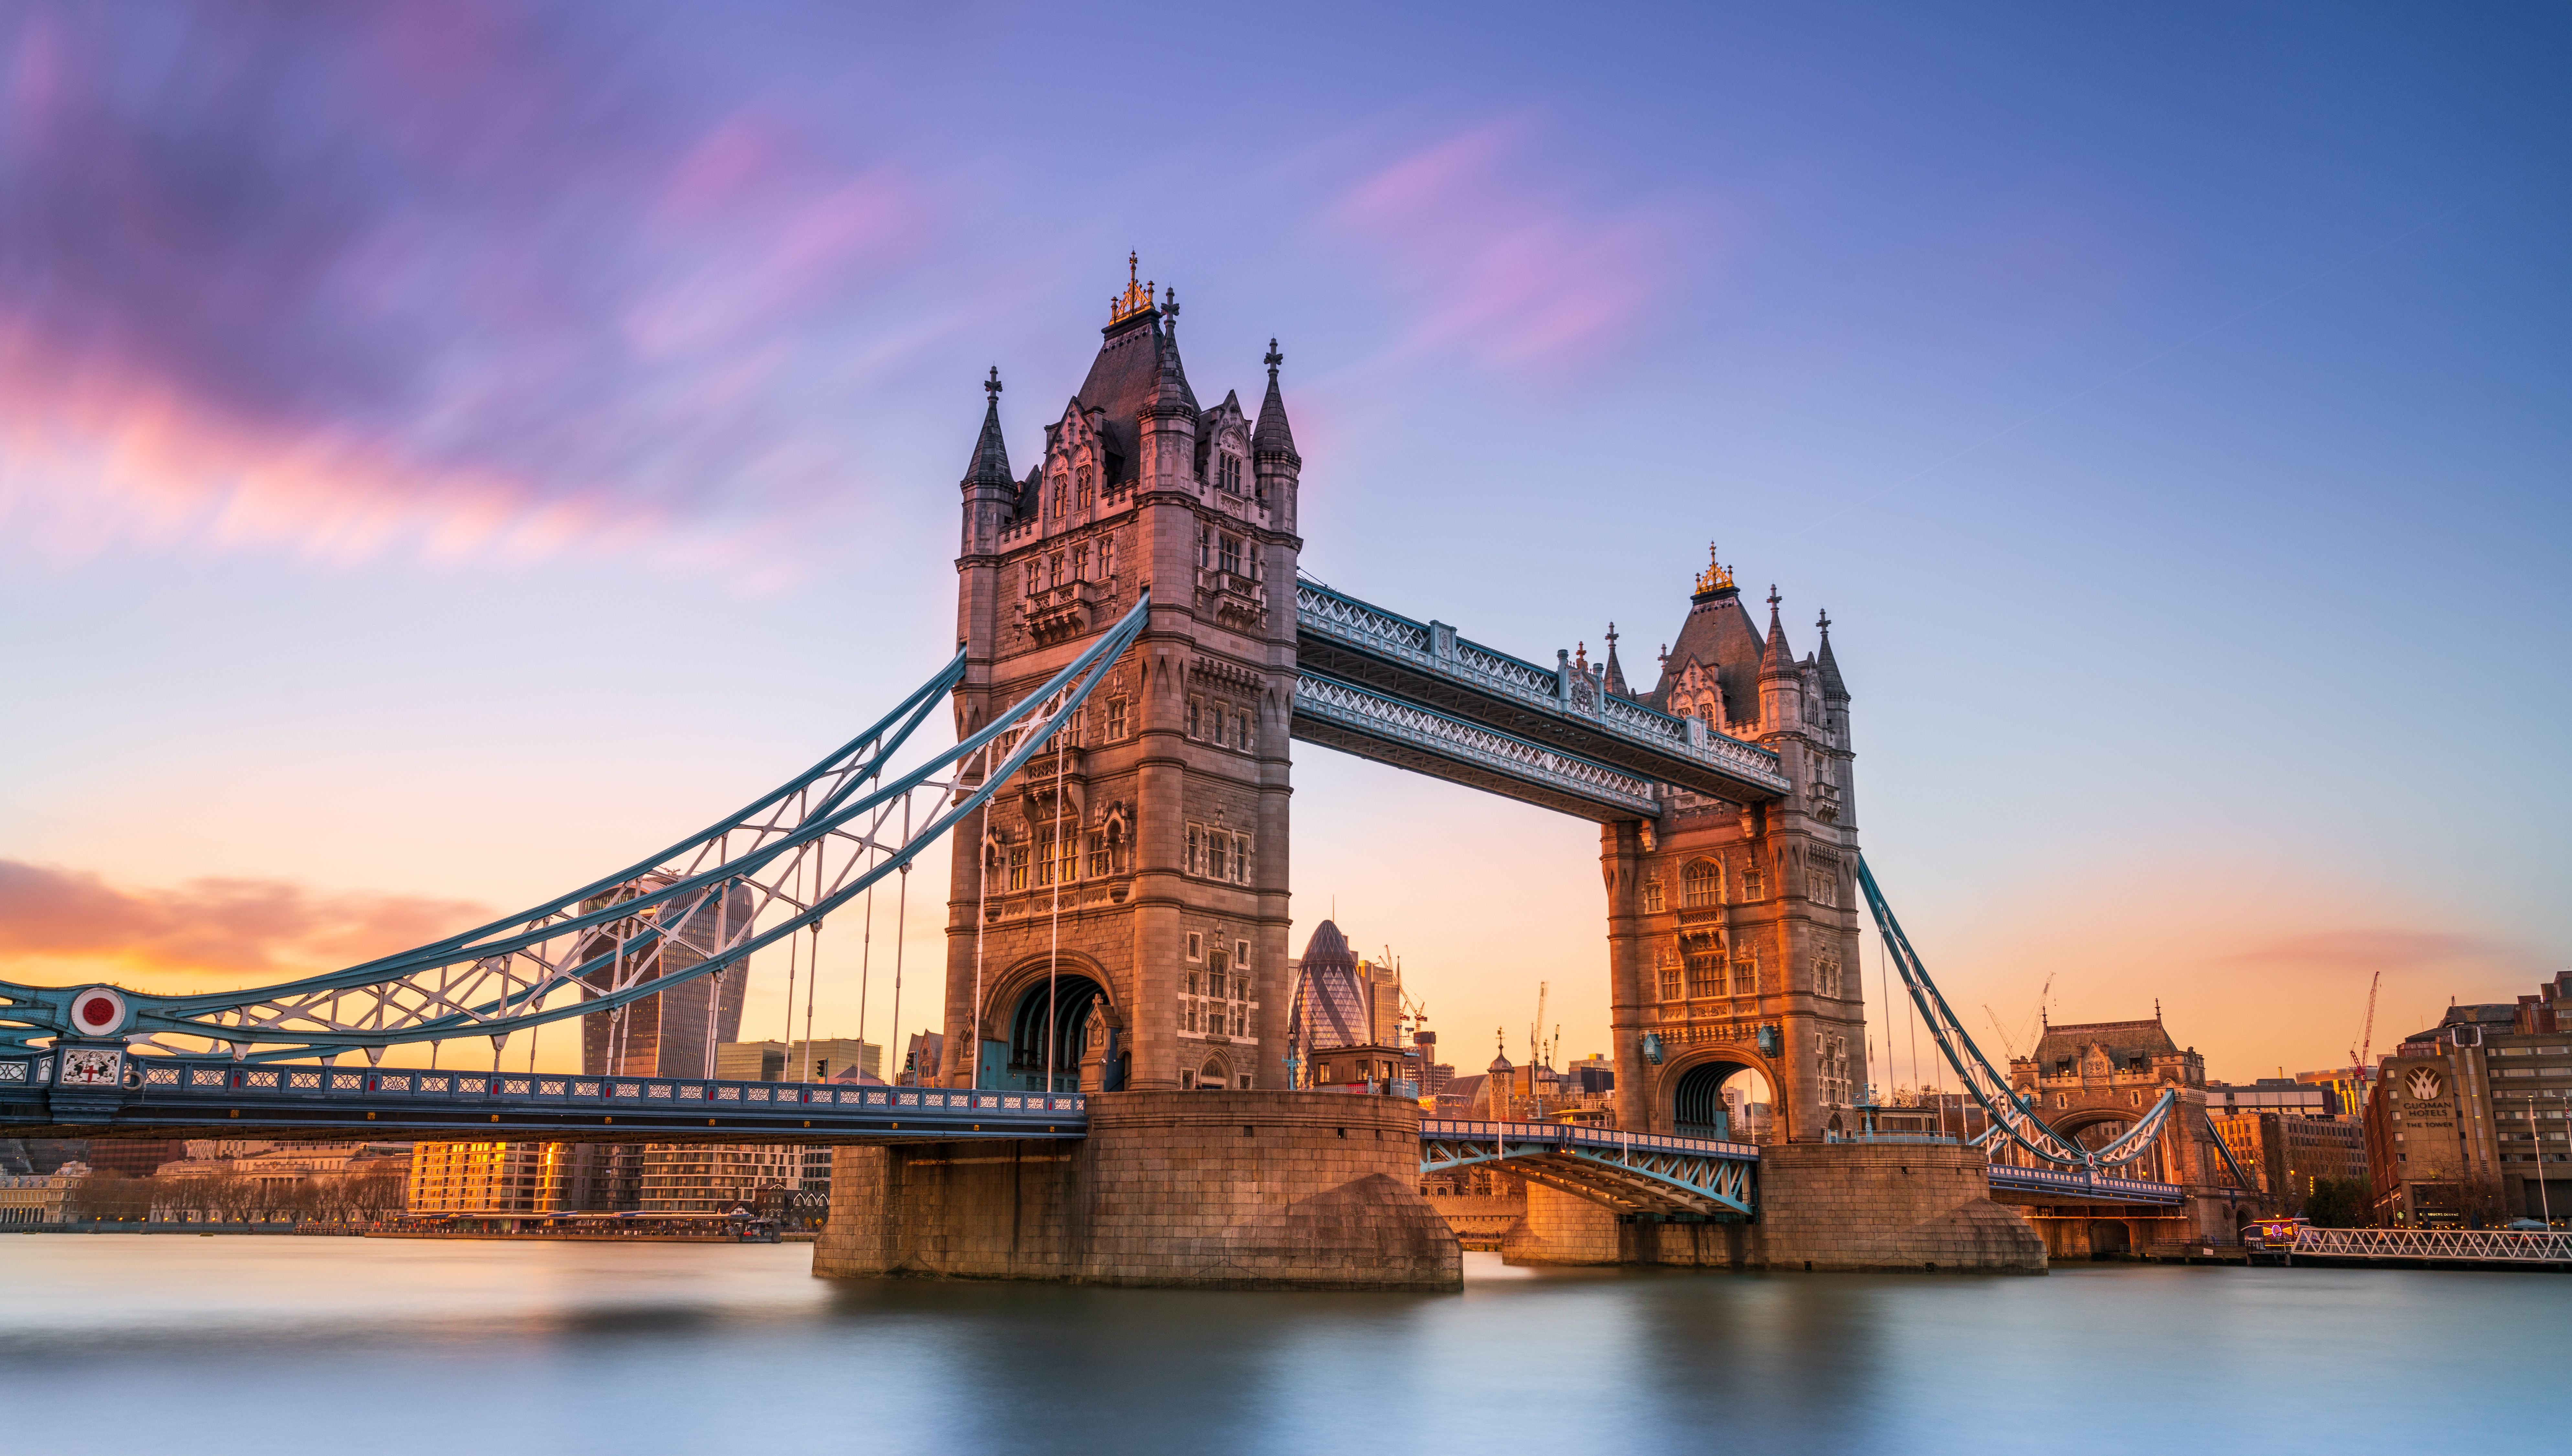 Virgin Atlantic flights to London, photo of the Tower Bridge in London